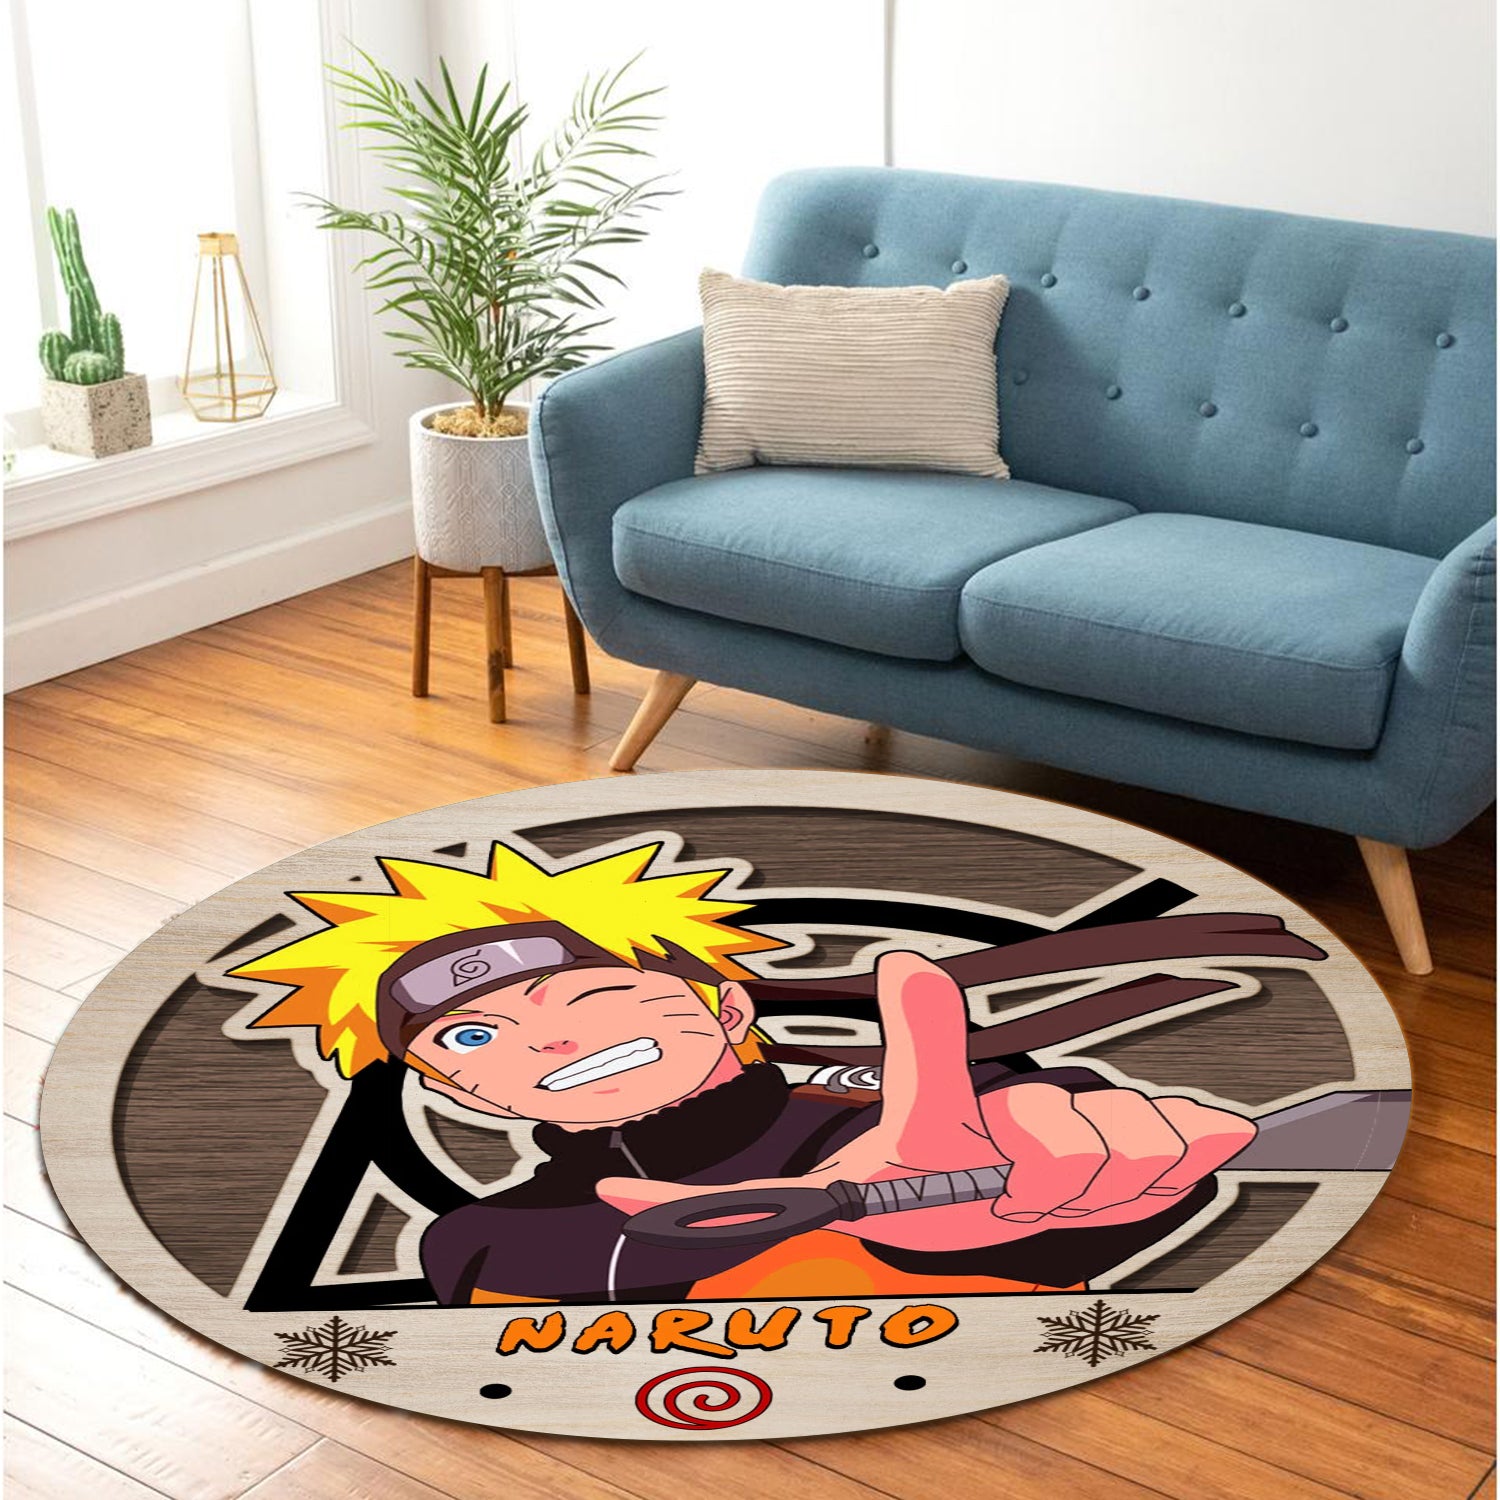 Naruto-Naruto Shippuden Round Carpet Rug Bedroom Livingroom Home Decor Nearkii